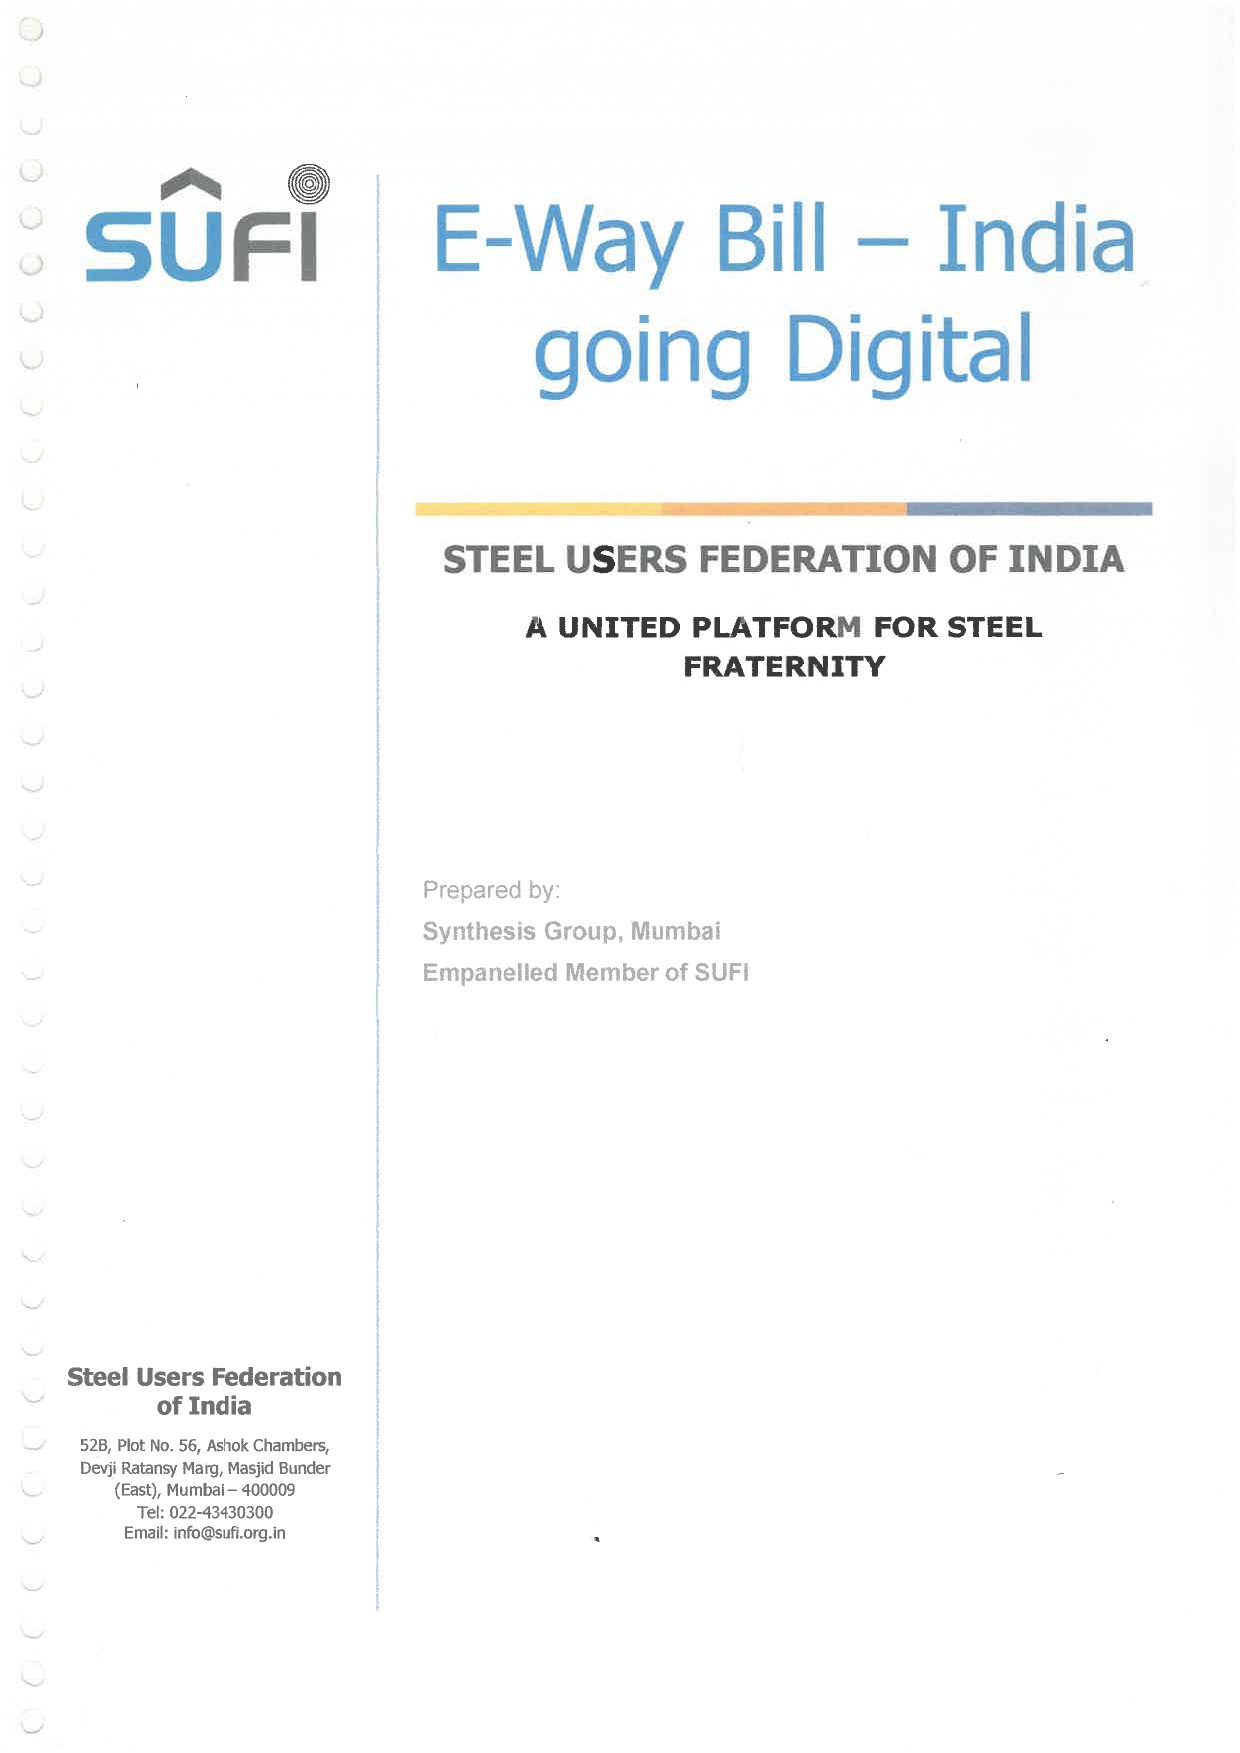 E-Way Bill – India going Digital